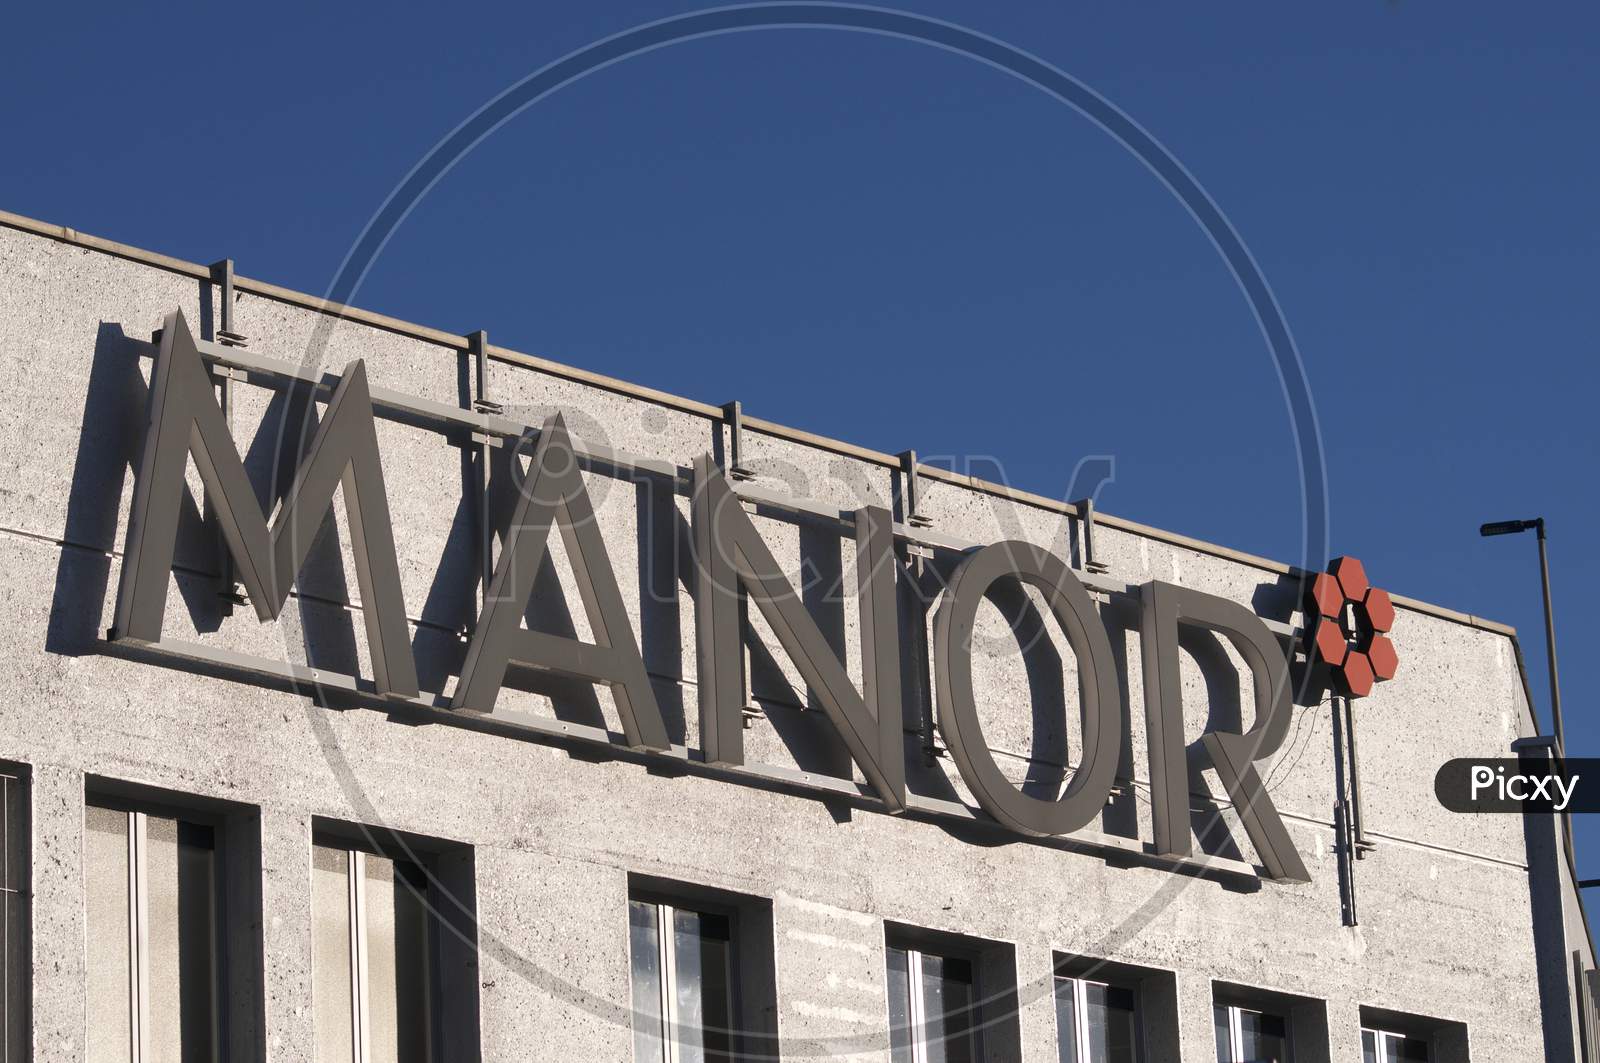 Manor Logo Sign